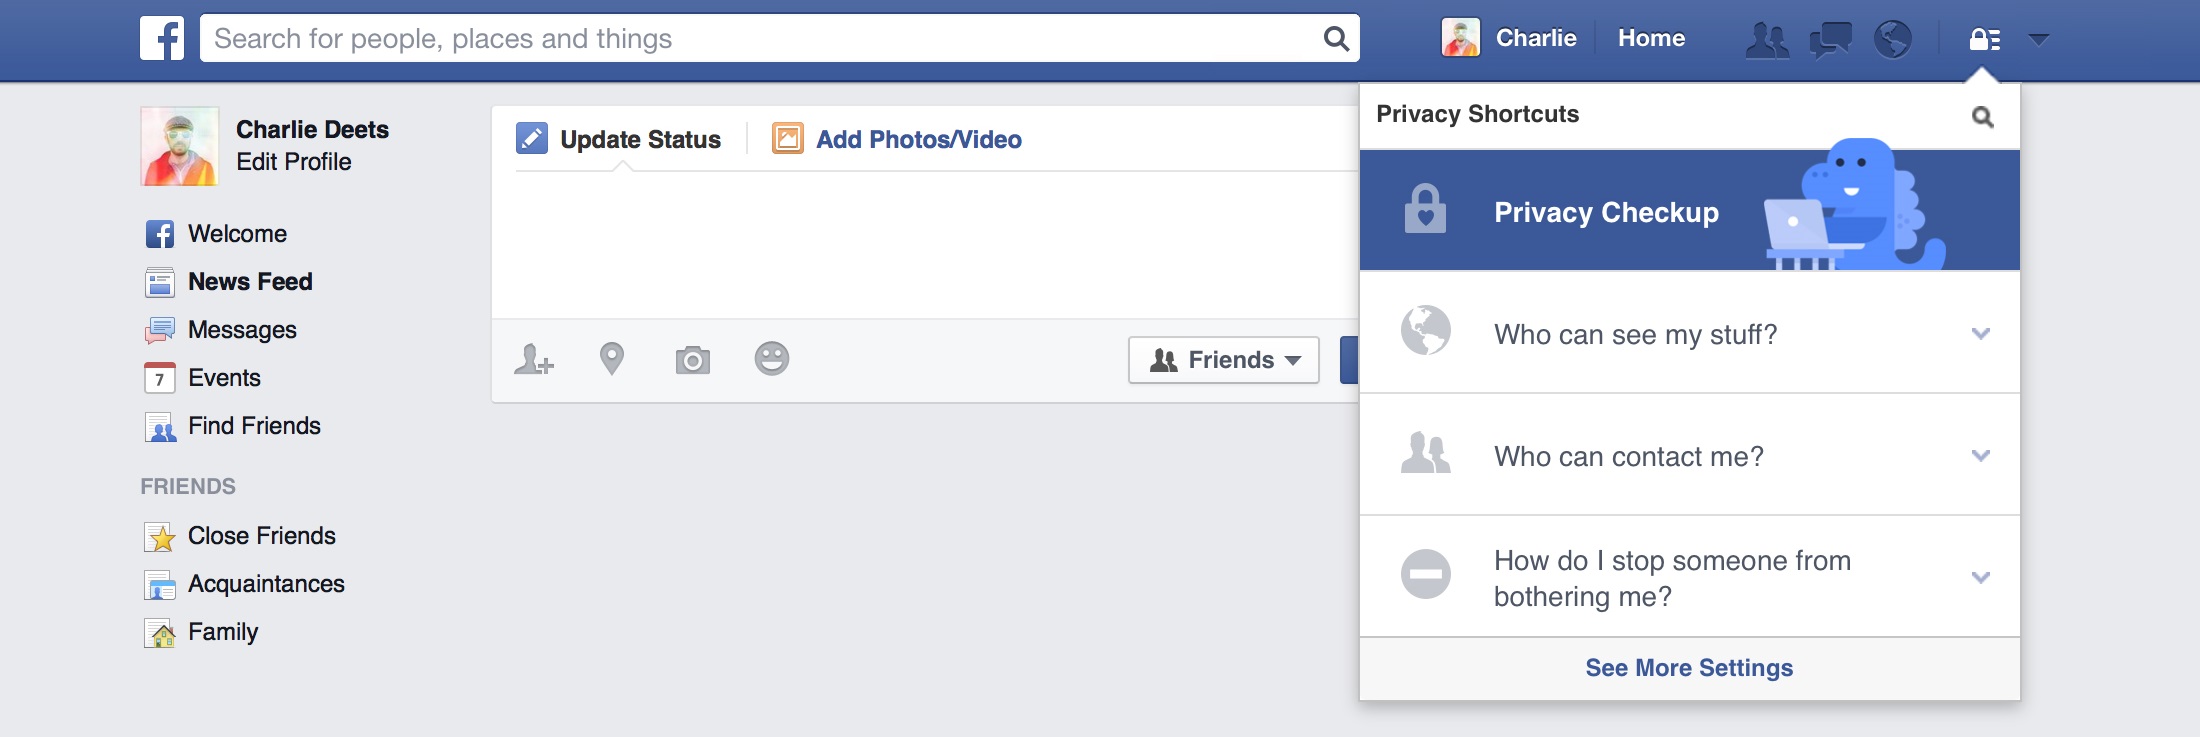 Facebook Privacy Check-up Shortcut